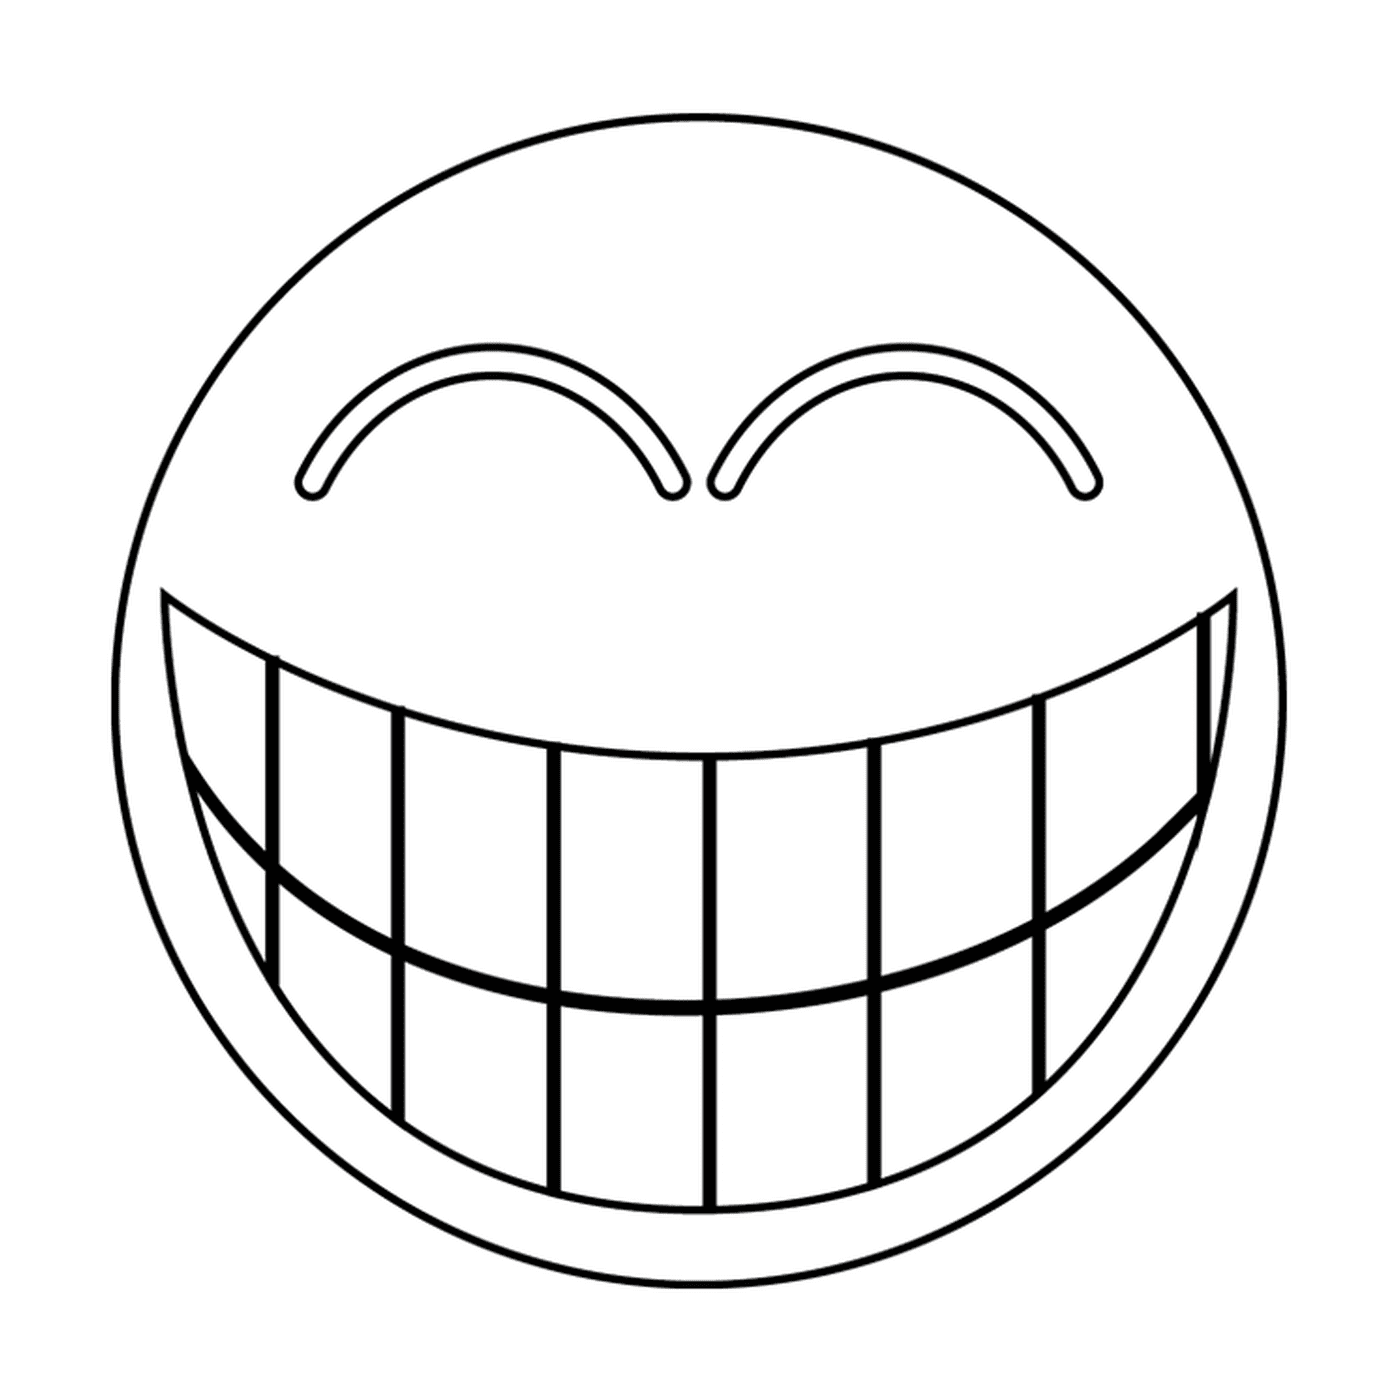   Visage souriant rire 